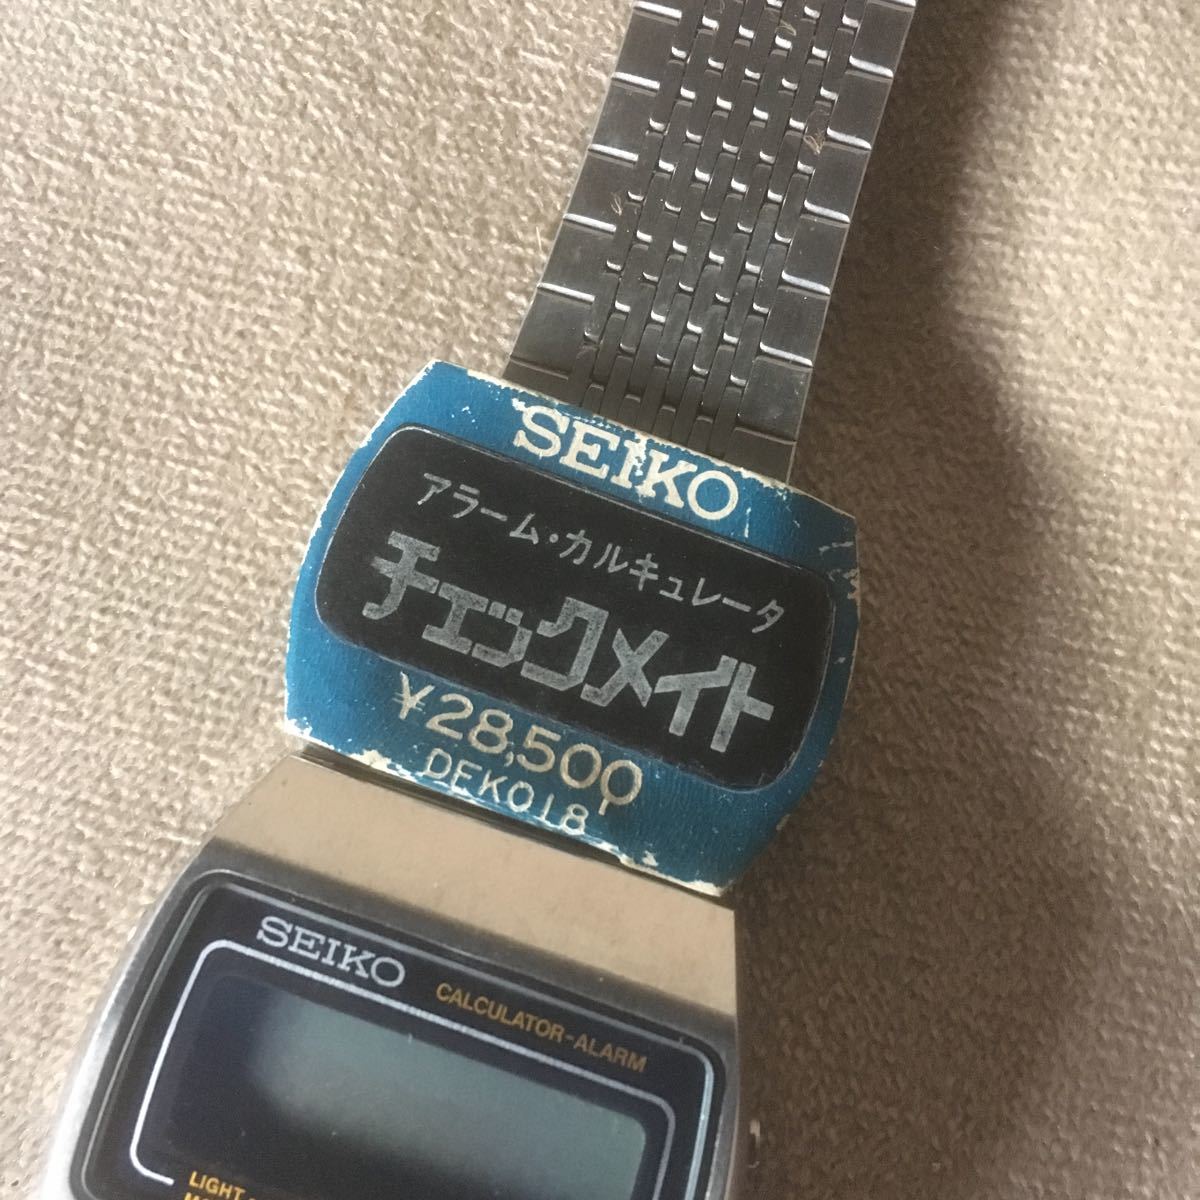 K7 SEIKO Seiko checkmate alarm wristwatch 0359-5000 dead stock black present condition junk 